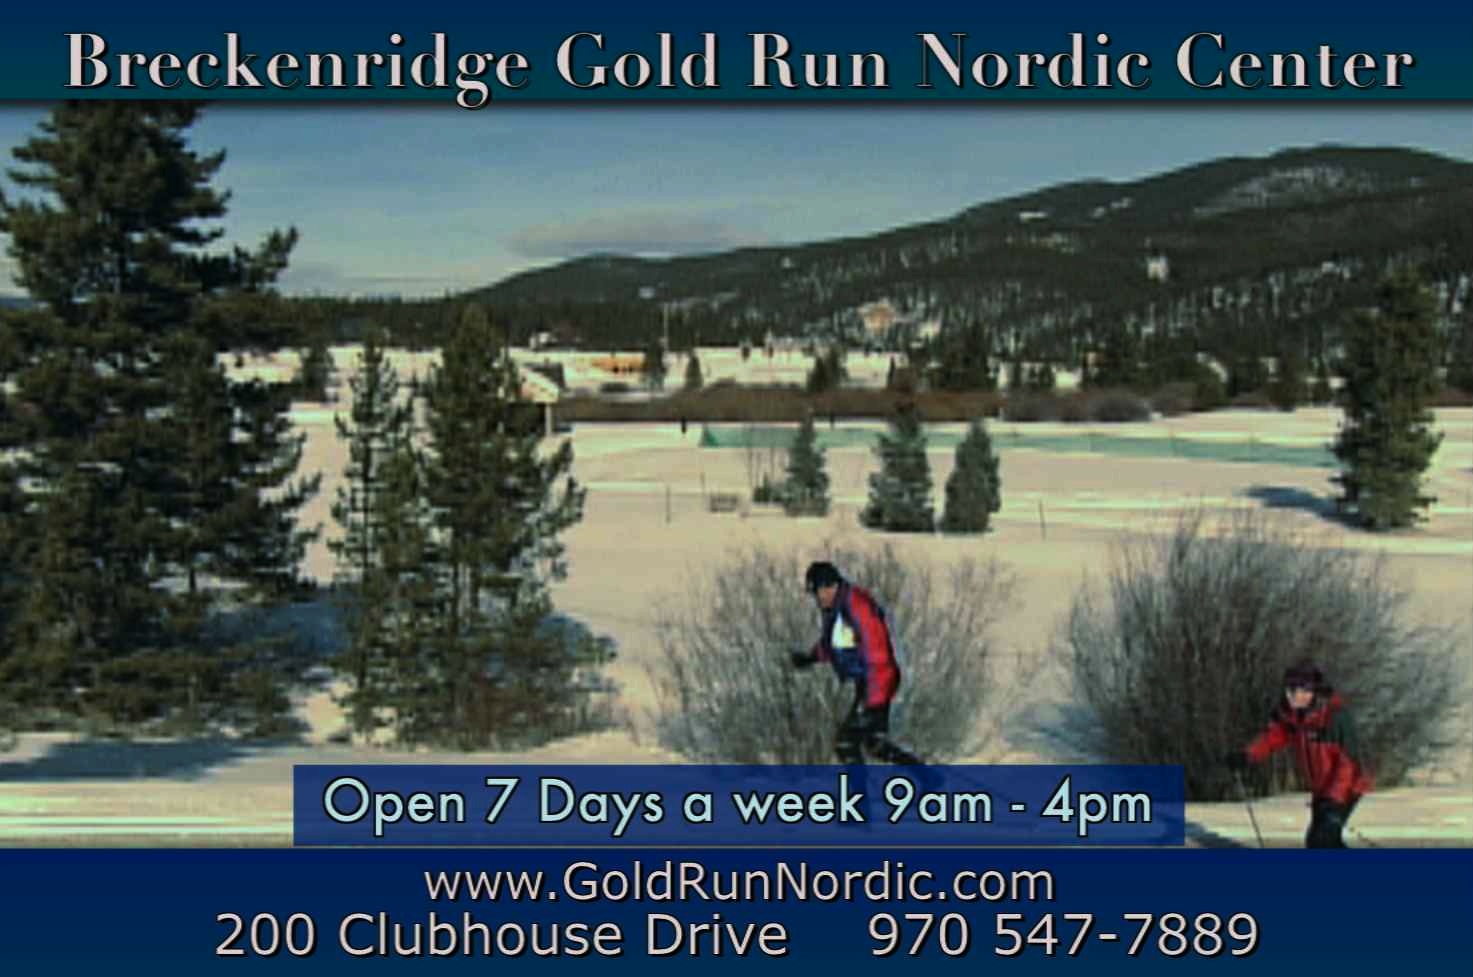 Gold Run Nordic Center